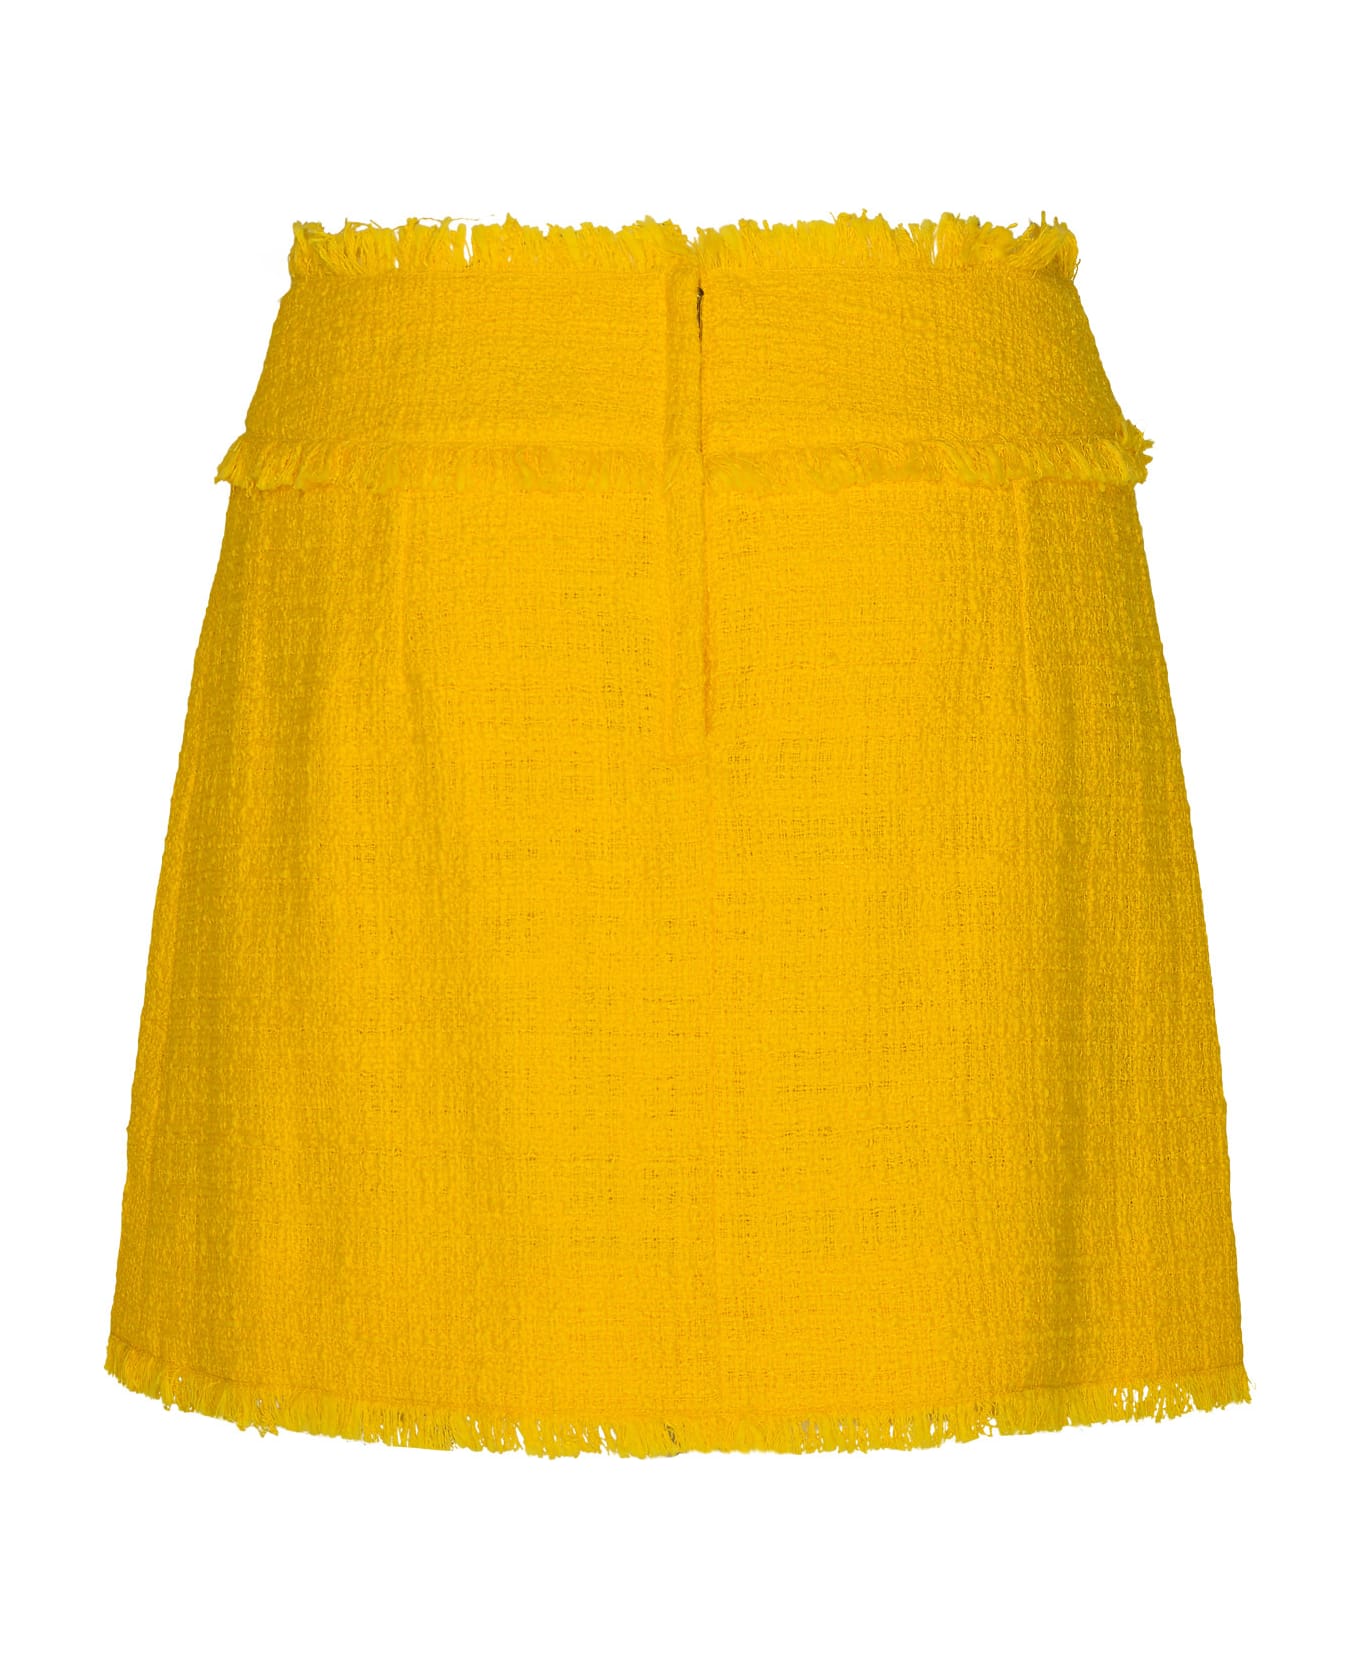 Dolce & Gabbana Yellow Cotton Blend Miniskirt - Yellow